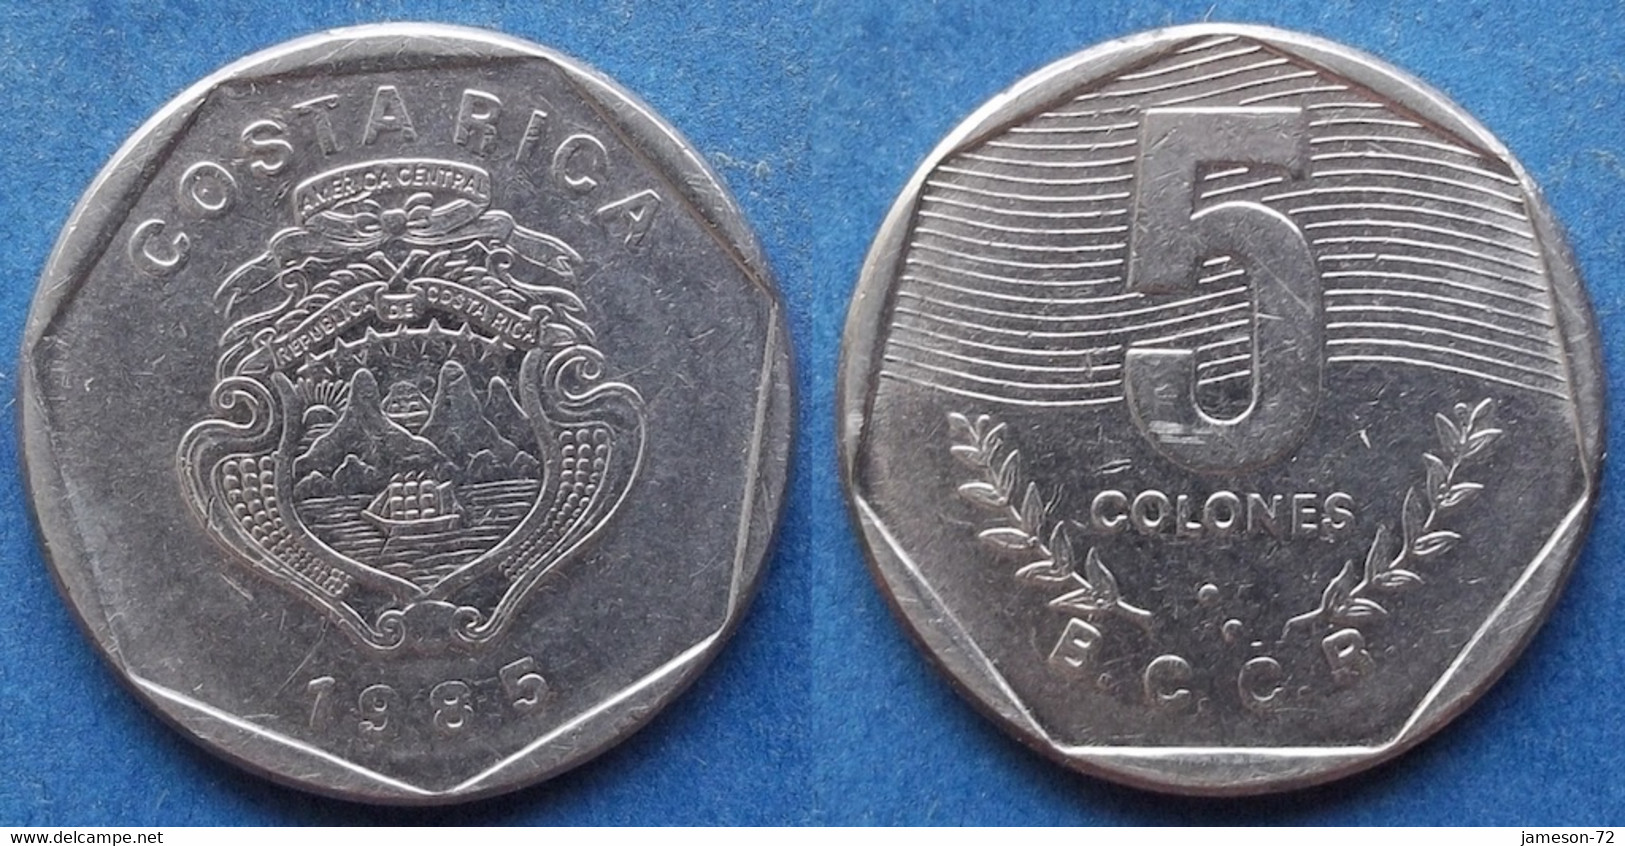 COSTA RICA - 5 Colones 1985 KM# 214.2 Monetary Reform (1920) - Edelweiss Coins - Costa Rica